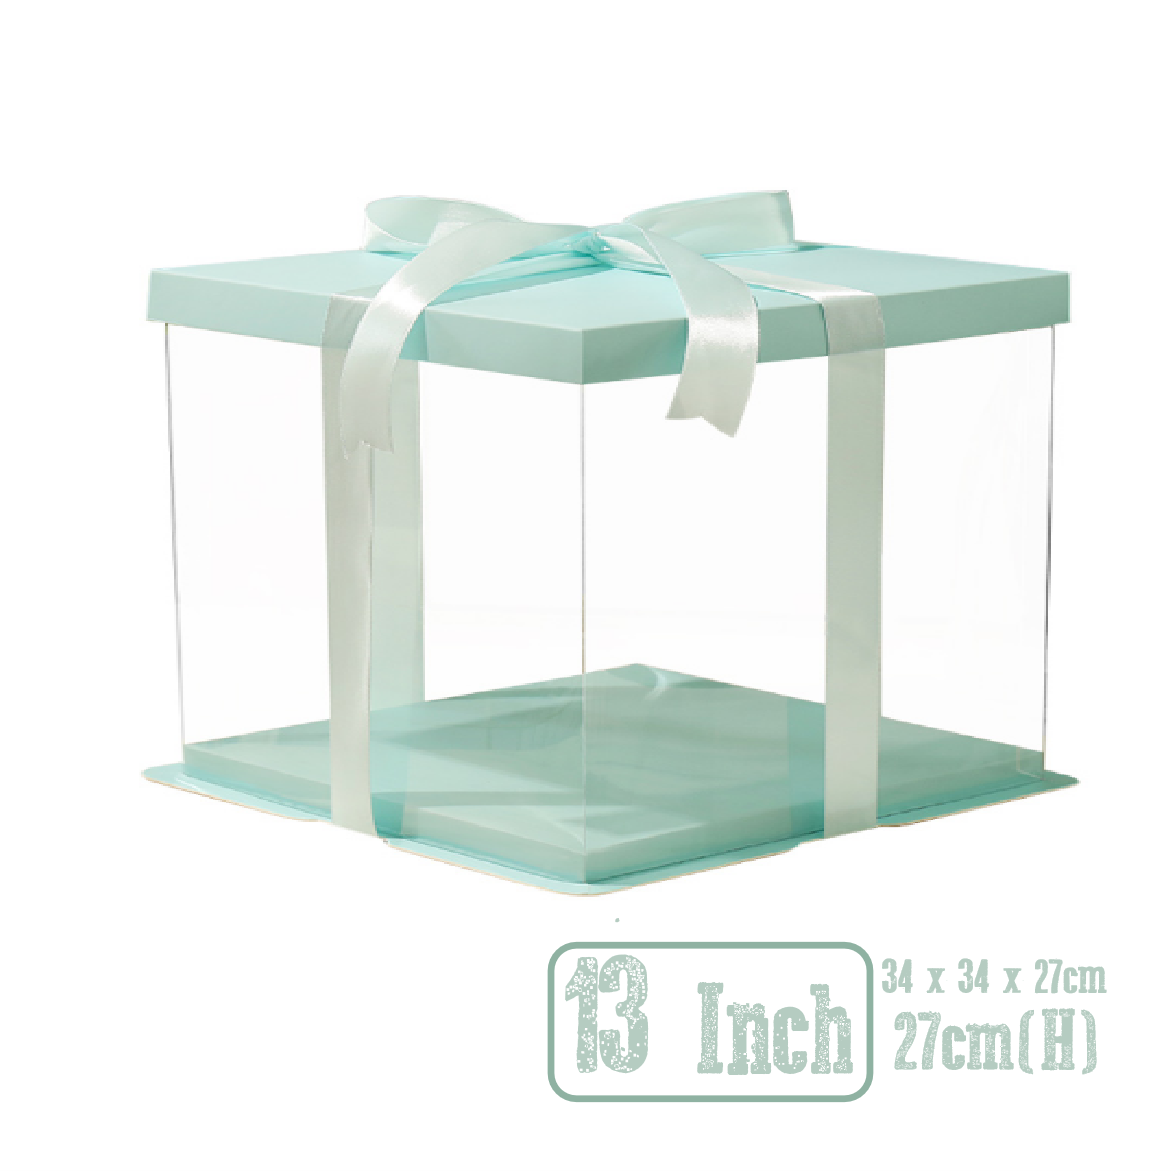 Cake Packaging - Elegant 13 Inch Cake Box Packaging 27cm Height - Blue